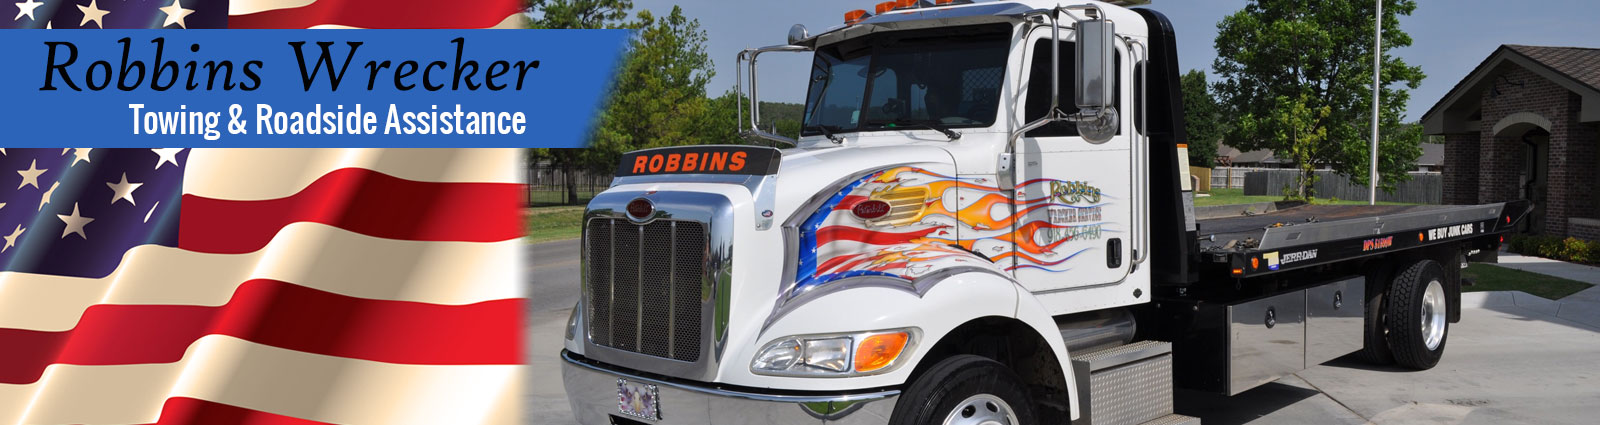 Robbins Wrecker Service Home page Image